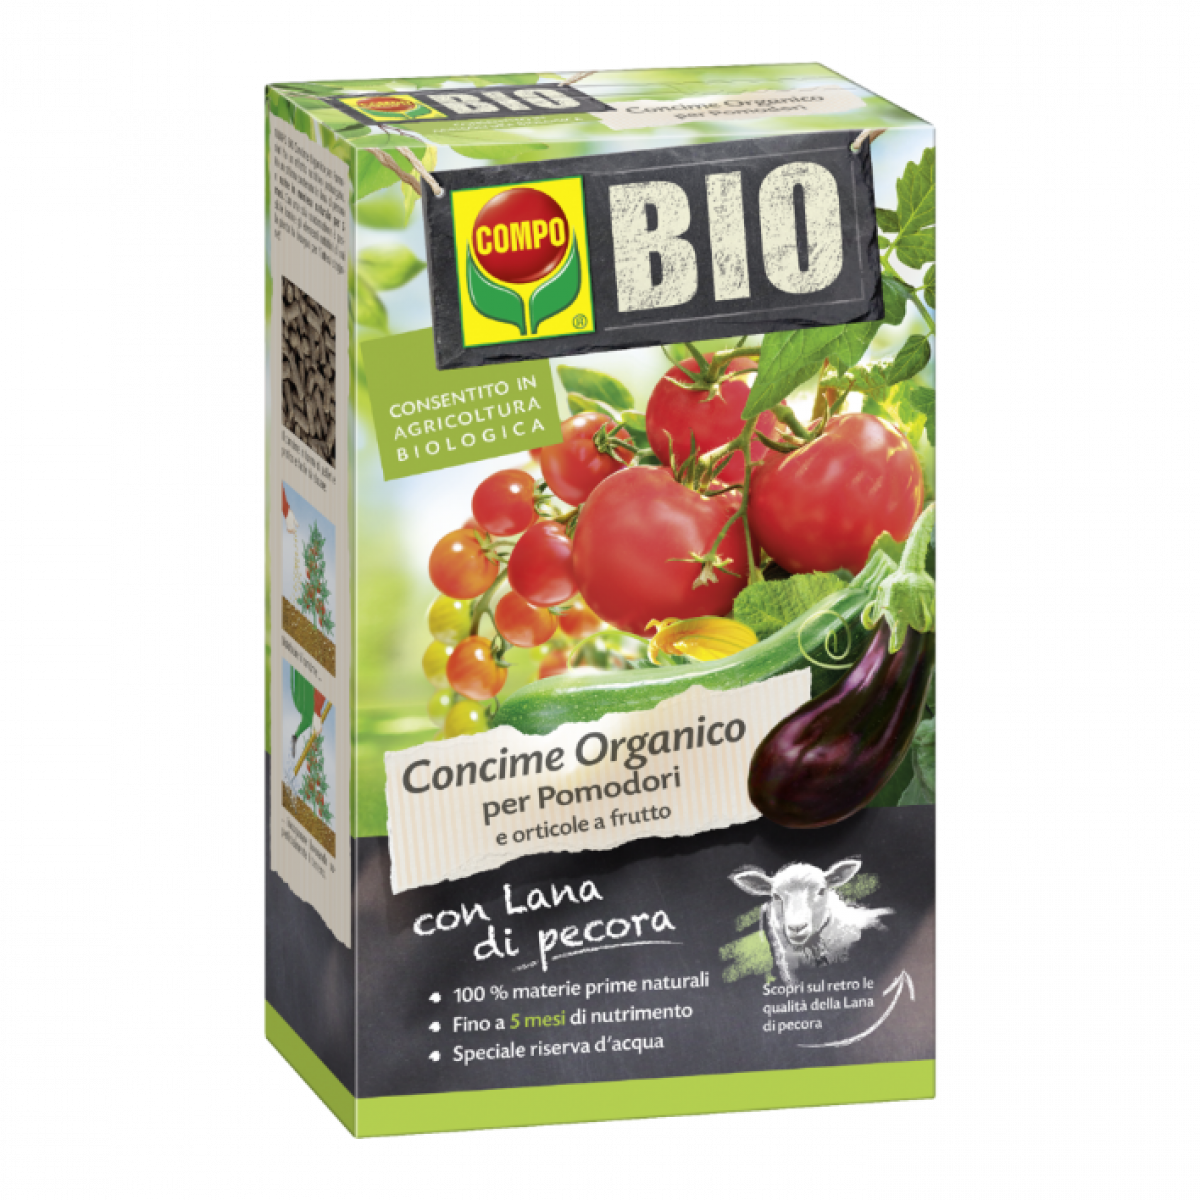 Concime organico per pomodori Compo - 750 g nutrimento per pomodori